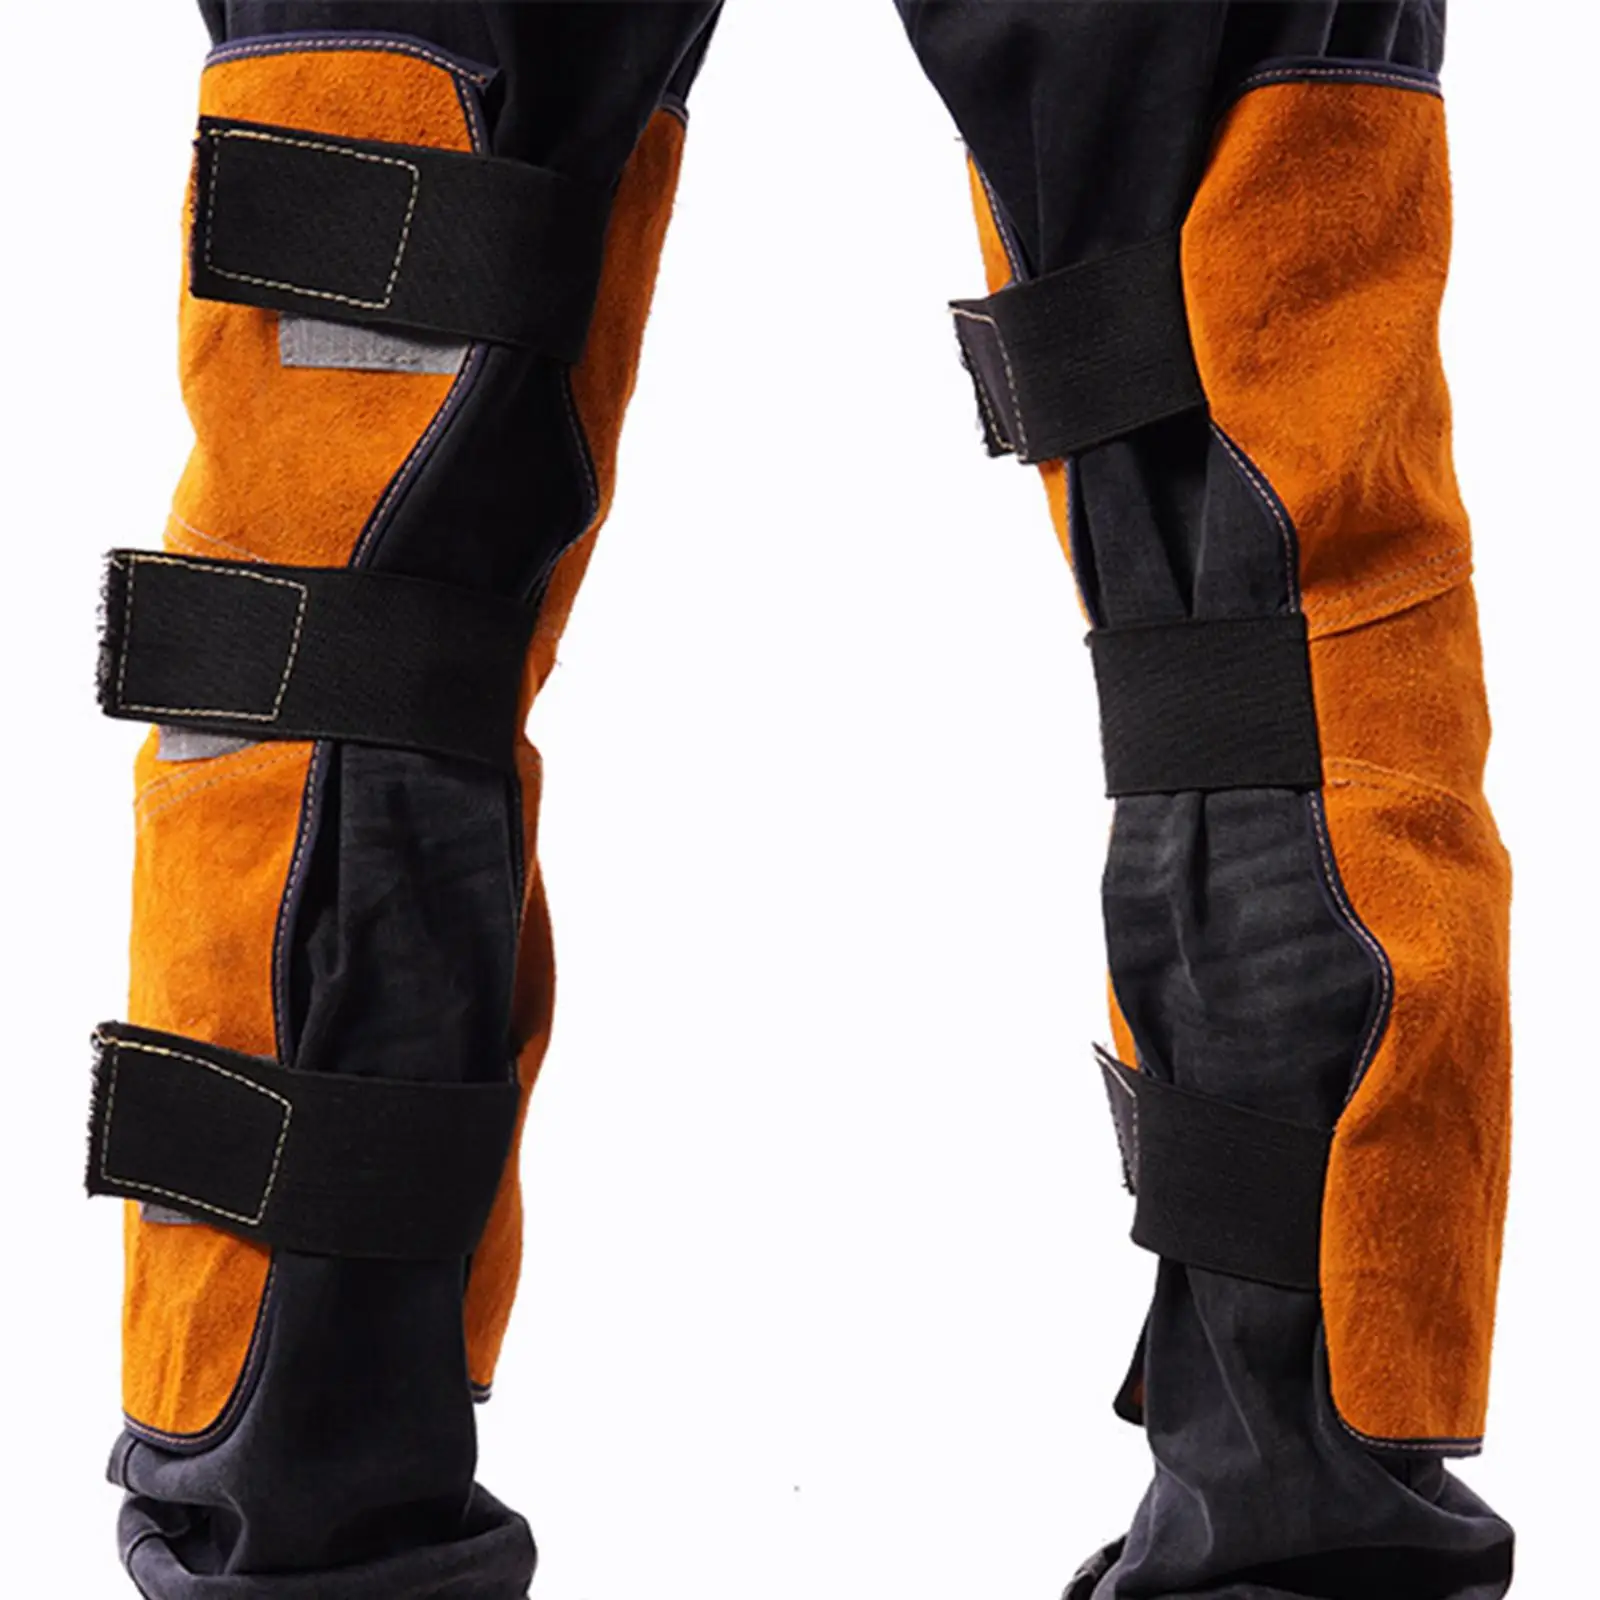 Welding Leg Covers Fireproof Anti Slip Heat Resistant for Welder Anti Scald Leg Cover Sleeve Wraps Leg Protection Knee Protector